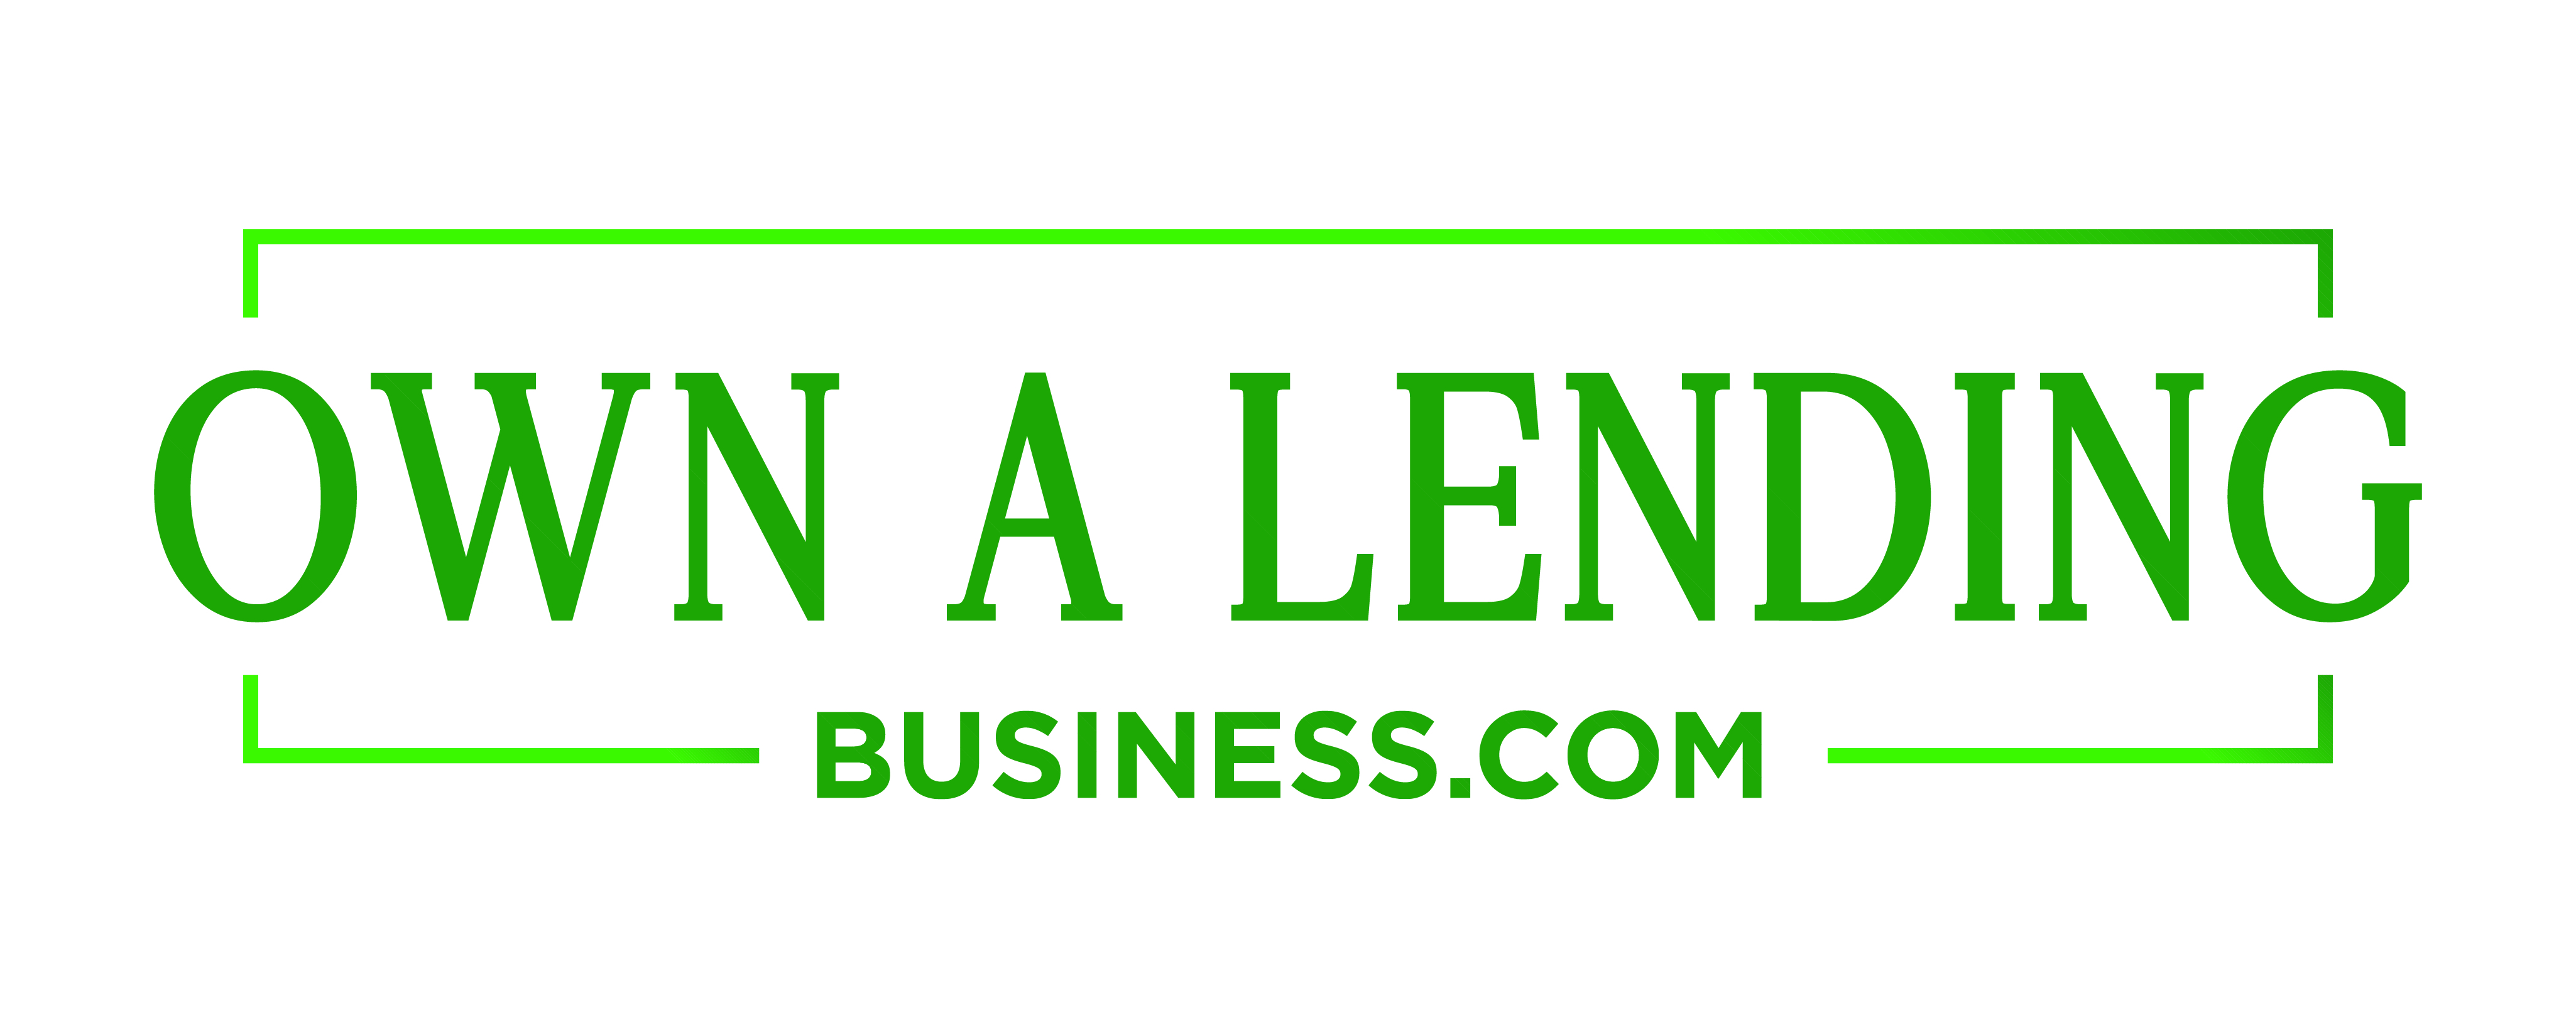 Own A Lending Business.Com Franchise